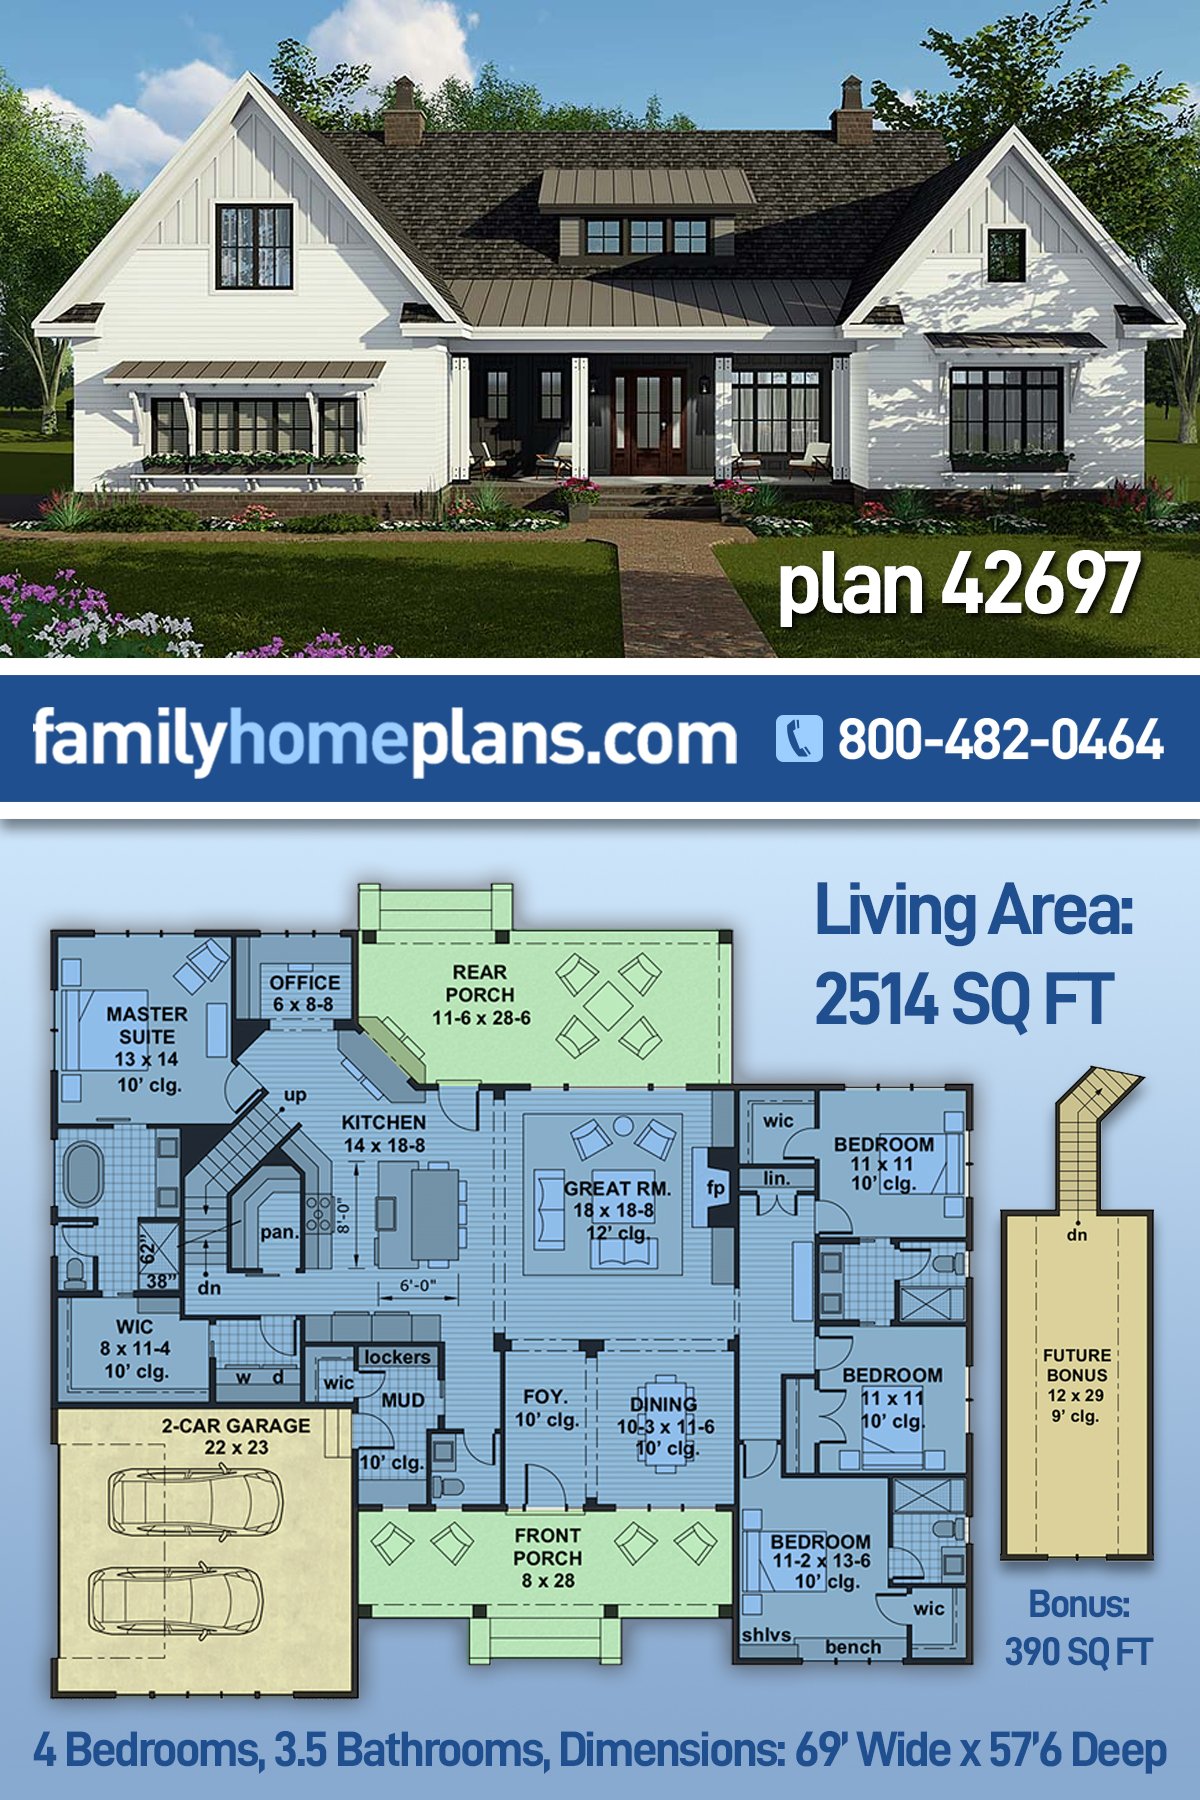 House Plan 42697